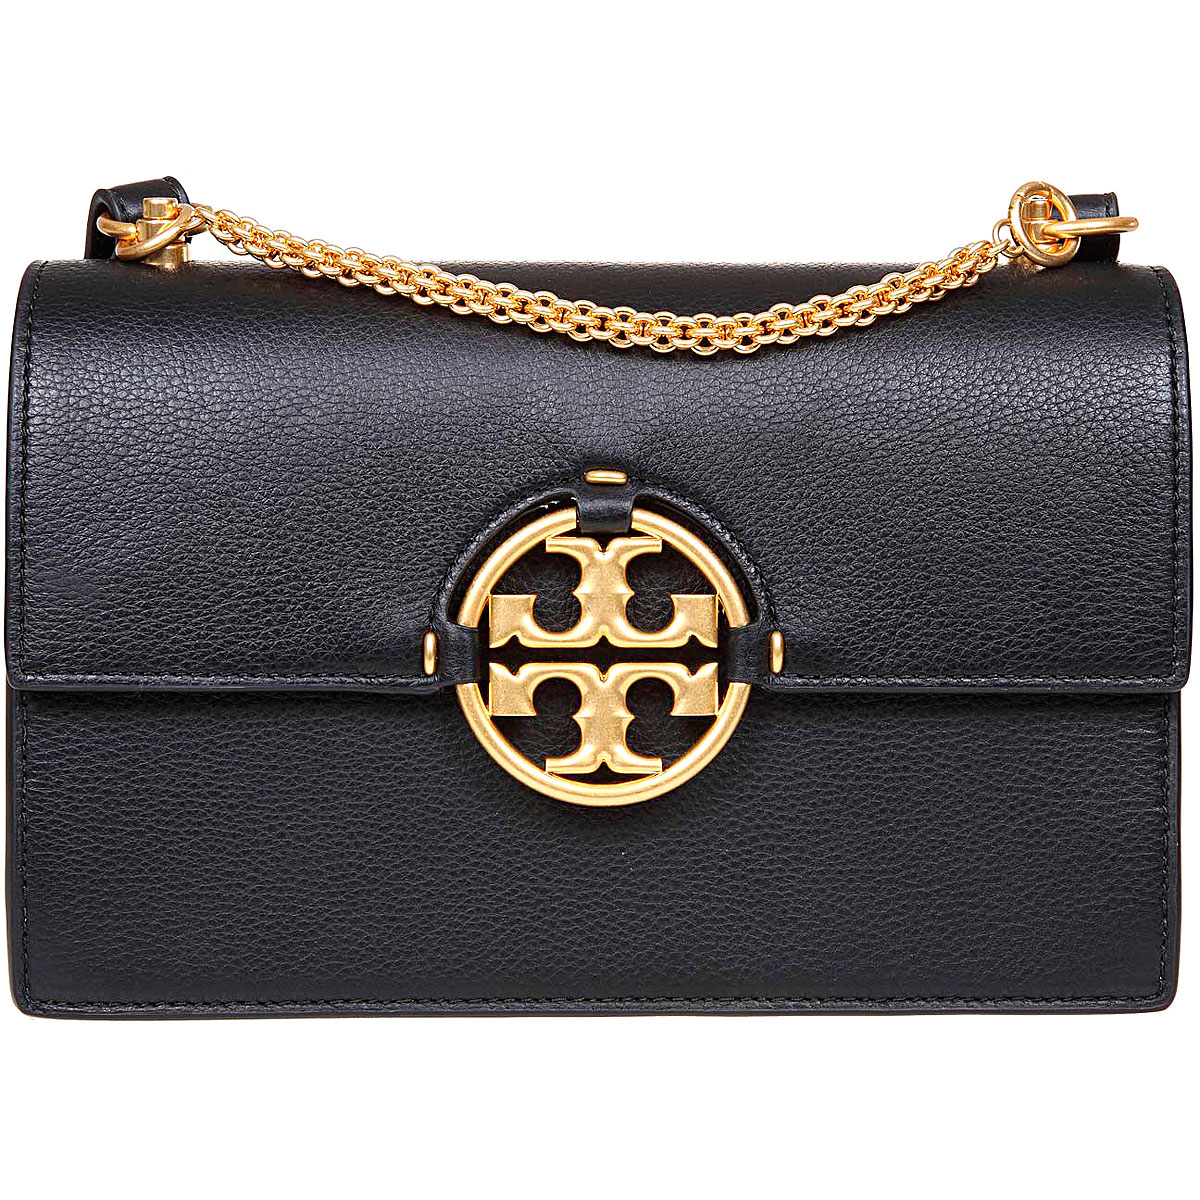 Handbags Tory Burch, Style code: 81688-001-